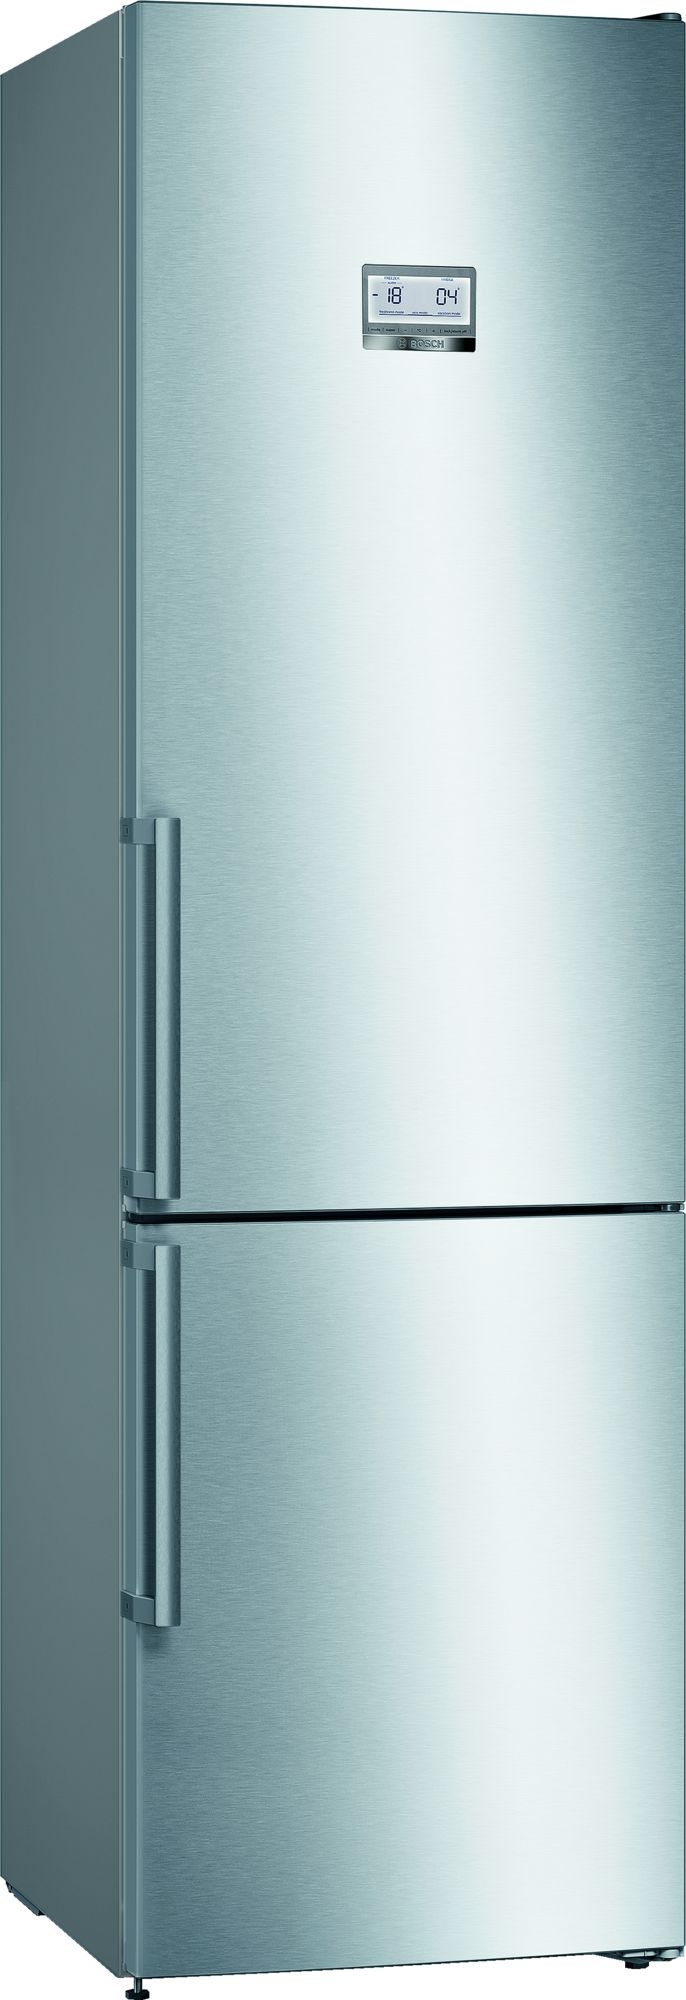 Bosch KGN39HIEP Freestanding No Frost Fridge Freezer-Stainless Steel/Easy Clean